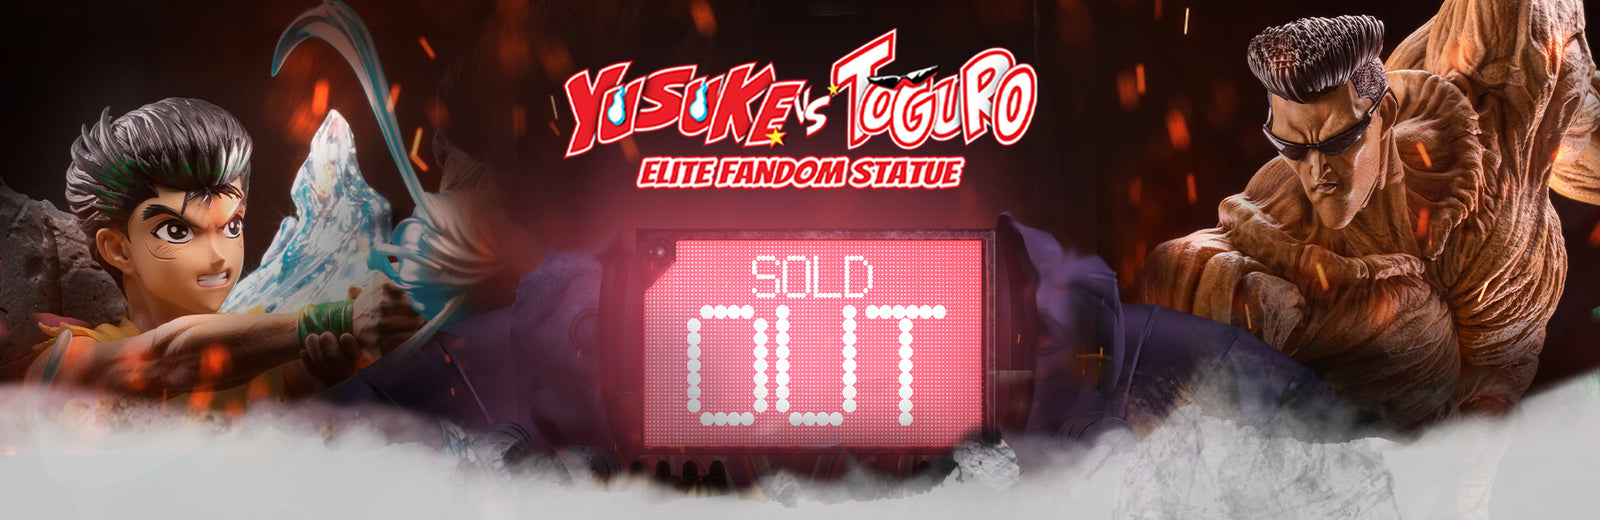 Yu Yu Hakusho: Yusuke vs Toguro Elite Fandom Statue - Figurama Collectors  For General Trading Co. / Limited Liability Company